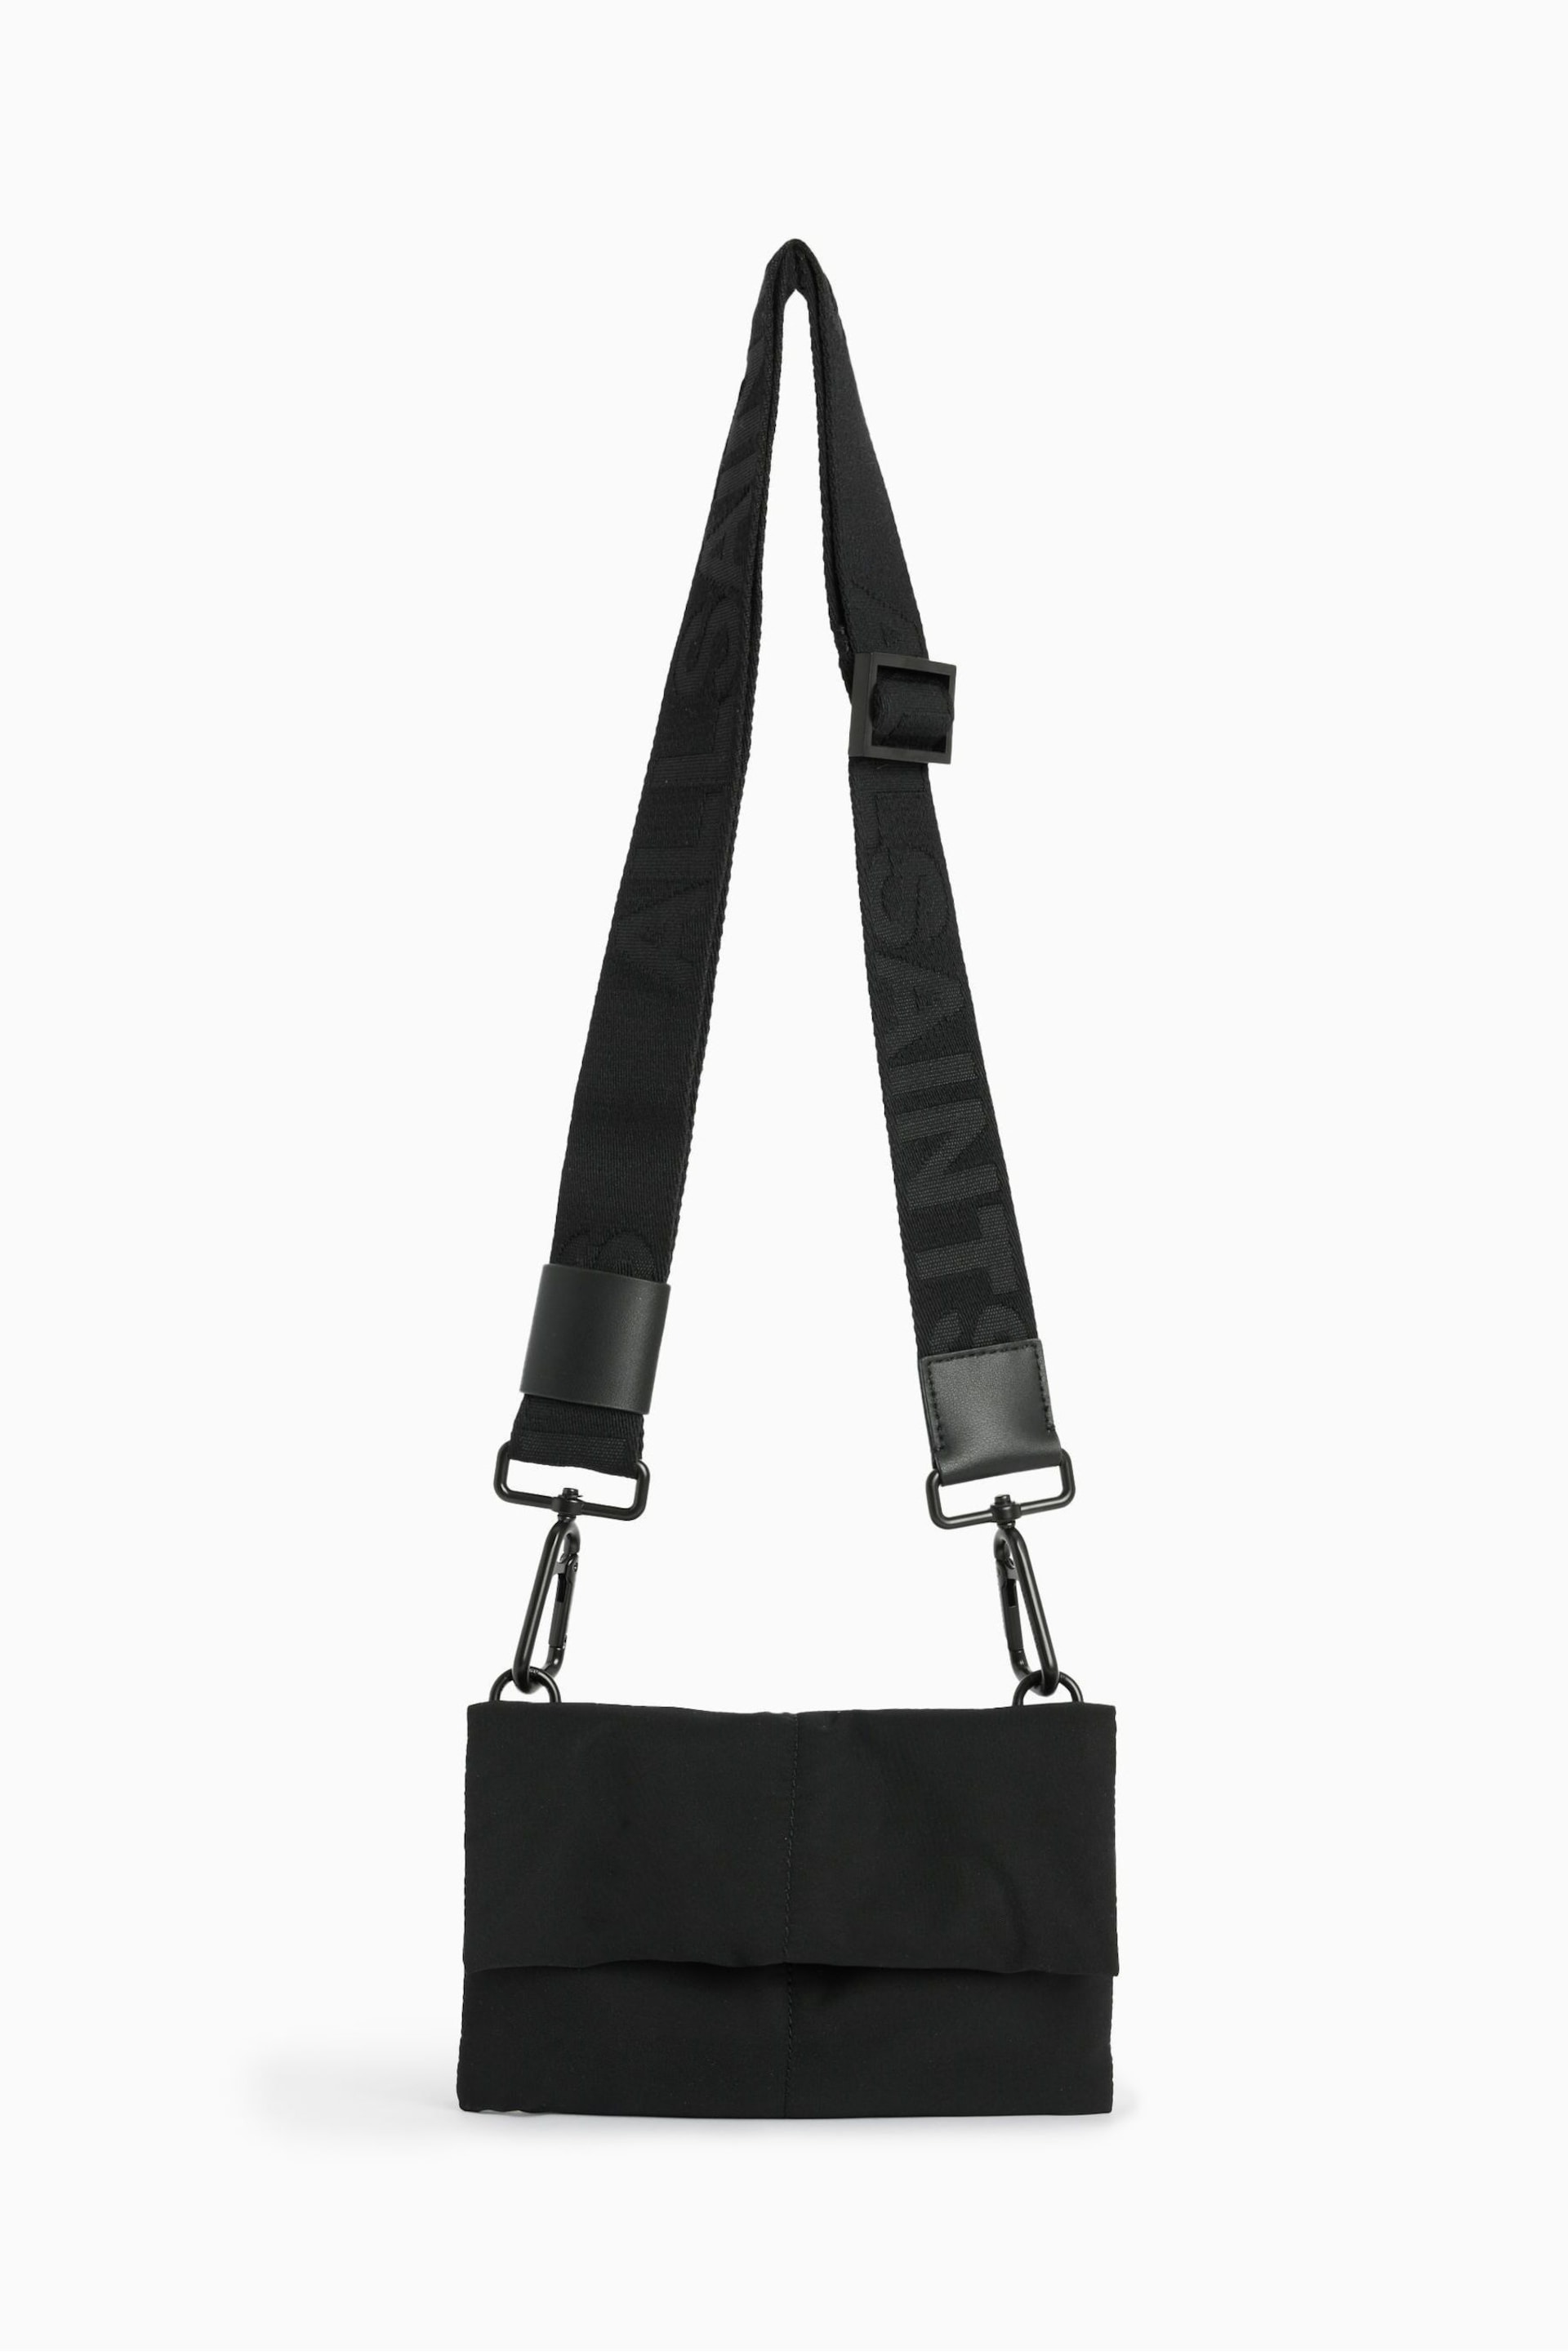 AllSaints Black Nylon Ezra Bag - Image 3 of 8